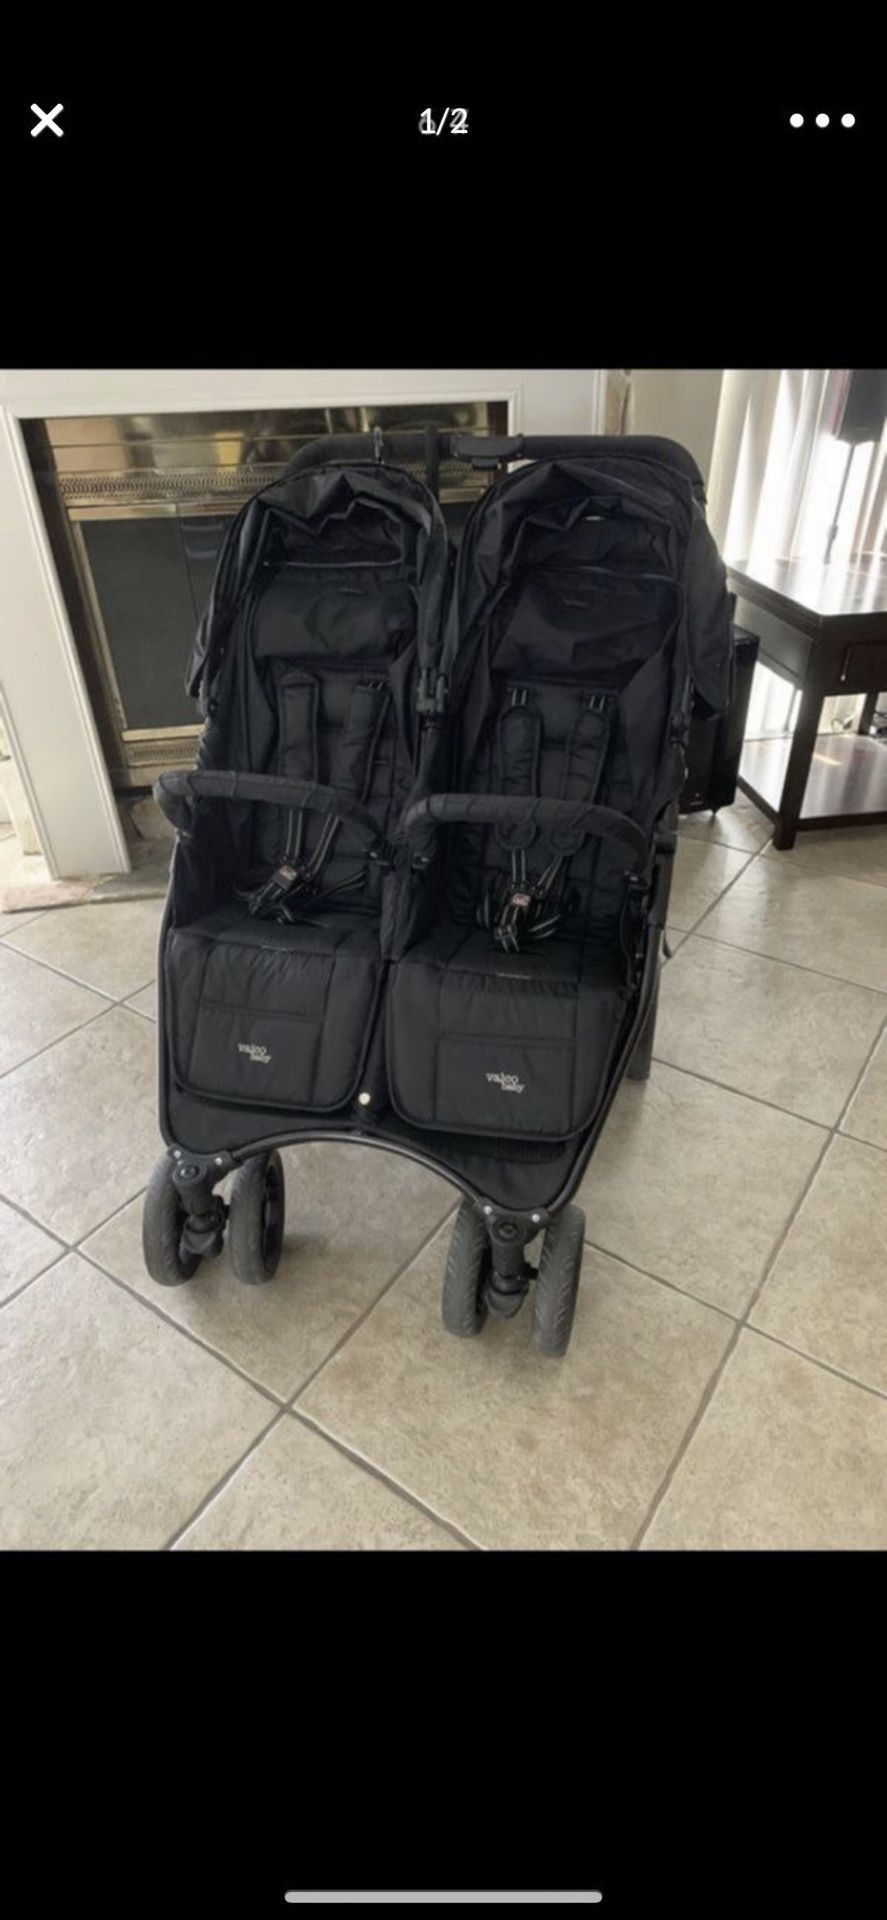 Valco baby double stroller